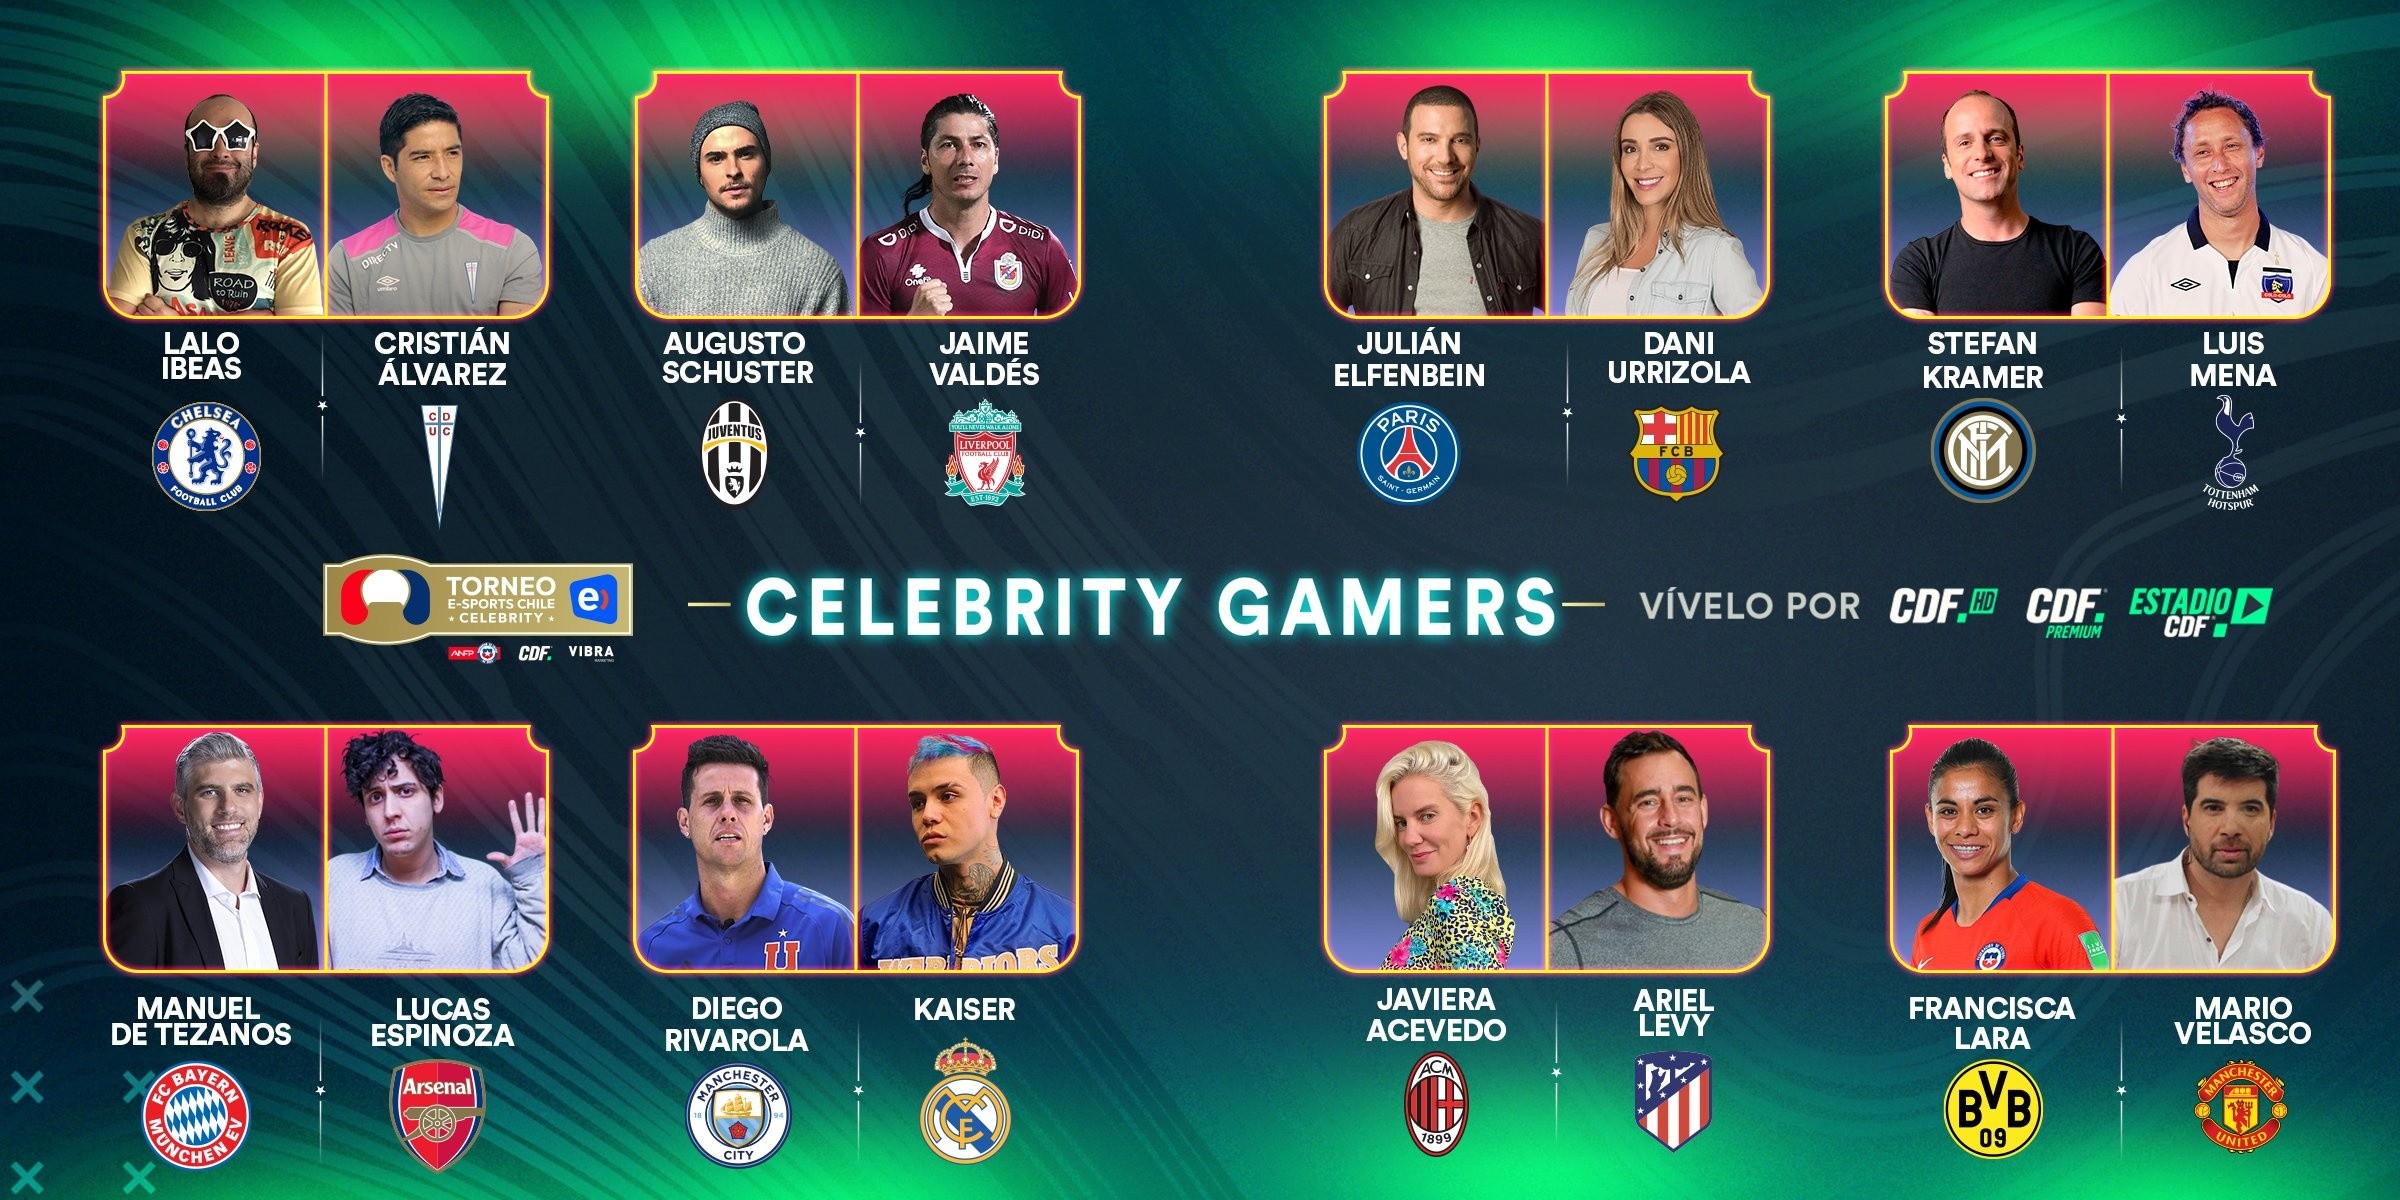 https://redgol.cl/export/sites/redgol/img/2020/05/29/gamers-torneo-esports-celebrity-cdf-2020.jpg_907378152.jpg